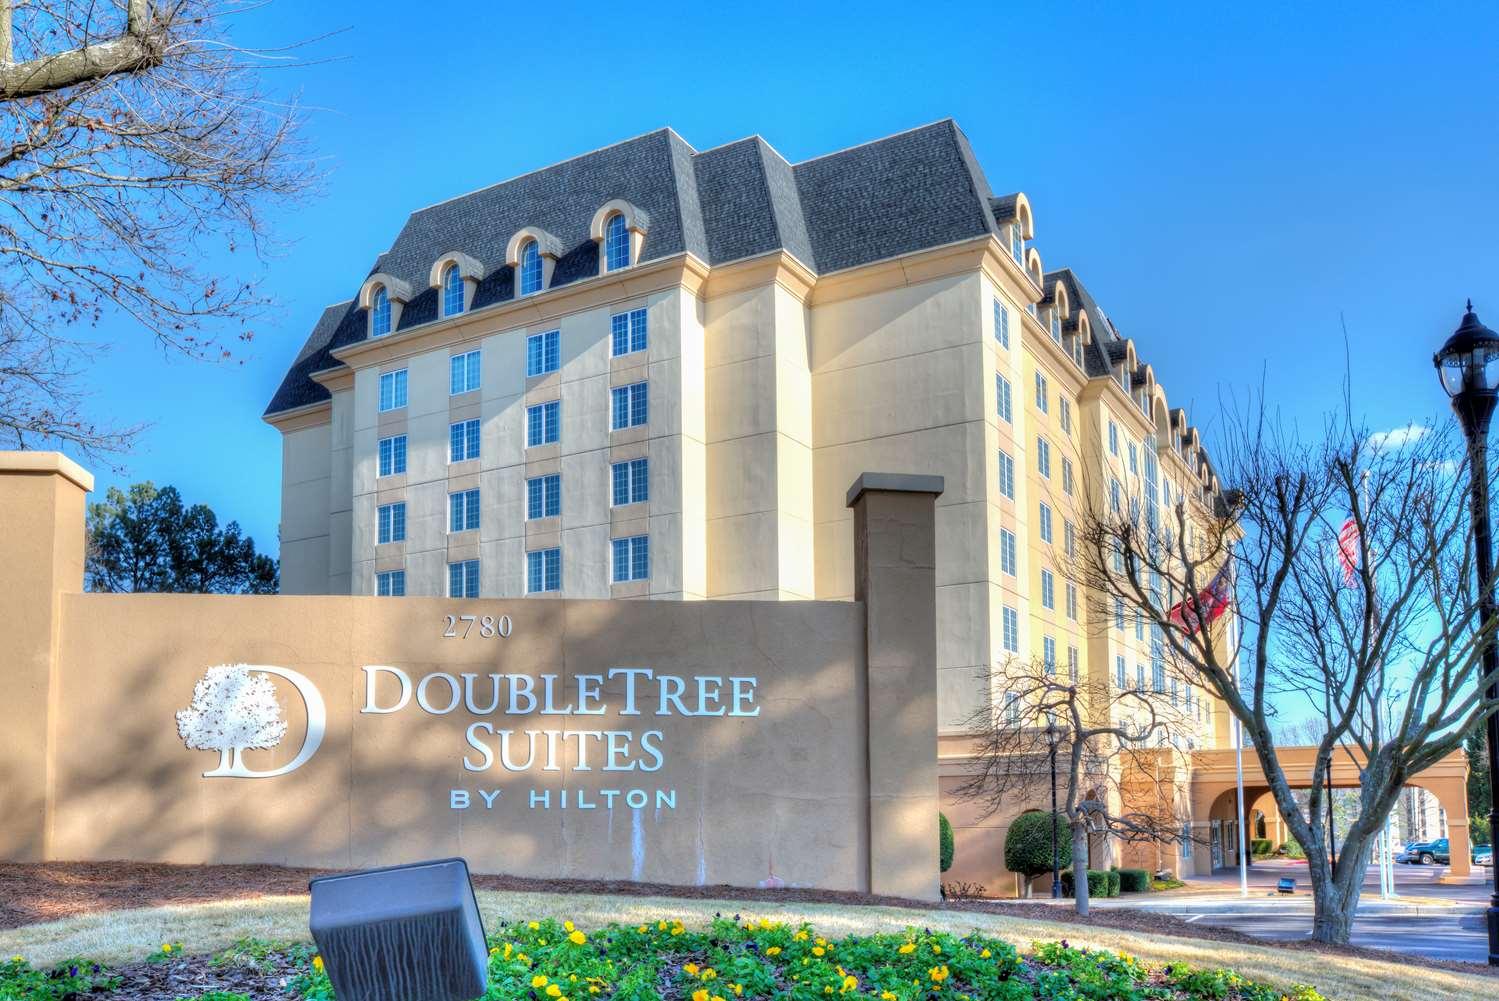 Doubletree Suites by Hilton at The Battery Atlanta in Atlanta, GA